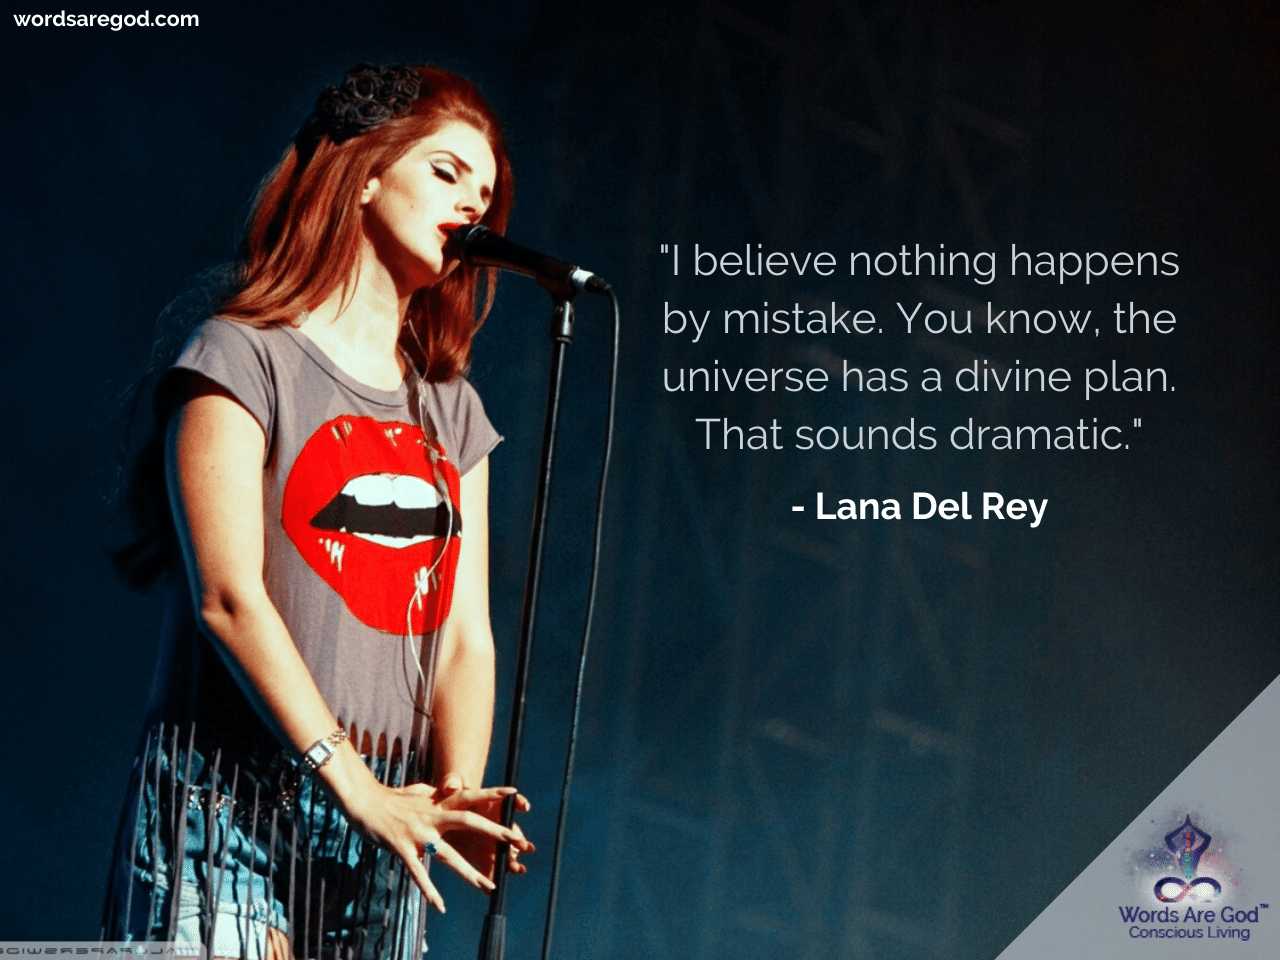 Lana Del Rey Life Quotes